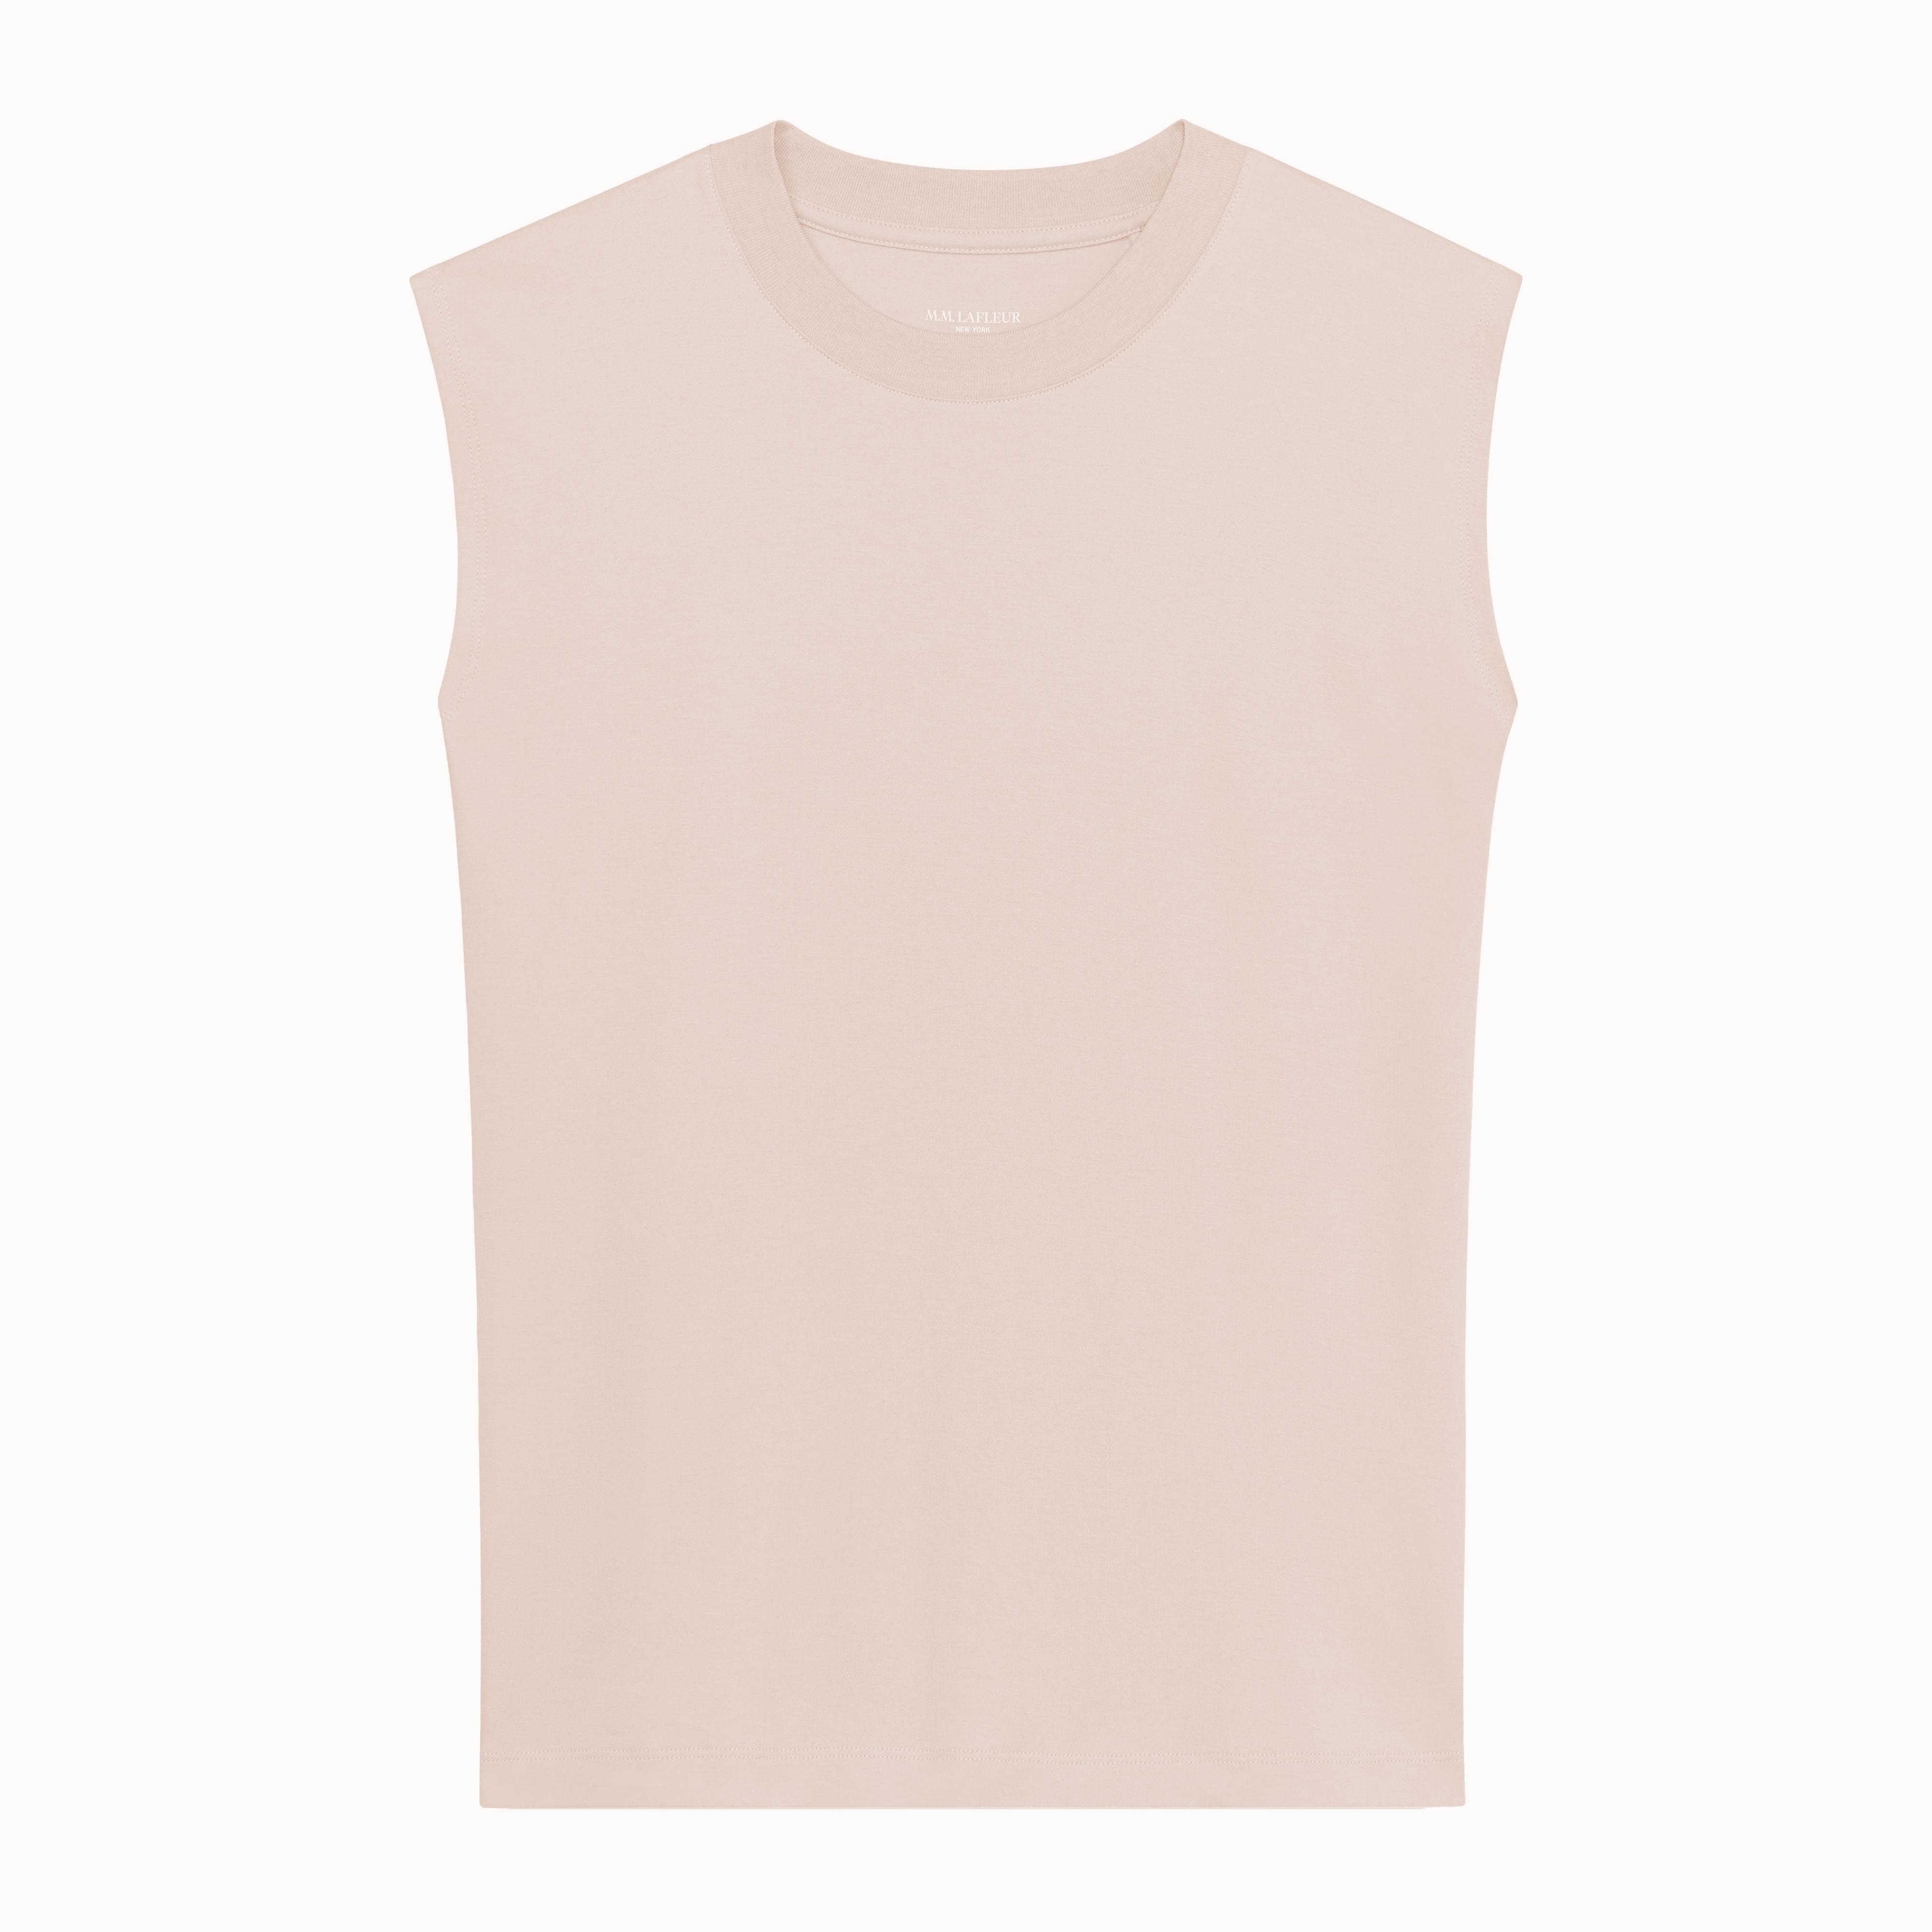 The Alina T-Shirt—Compact Cotton - Dusty Pink | M.M.LaFleur